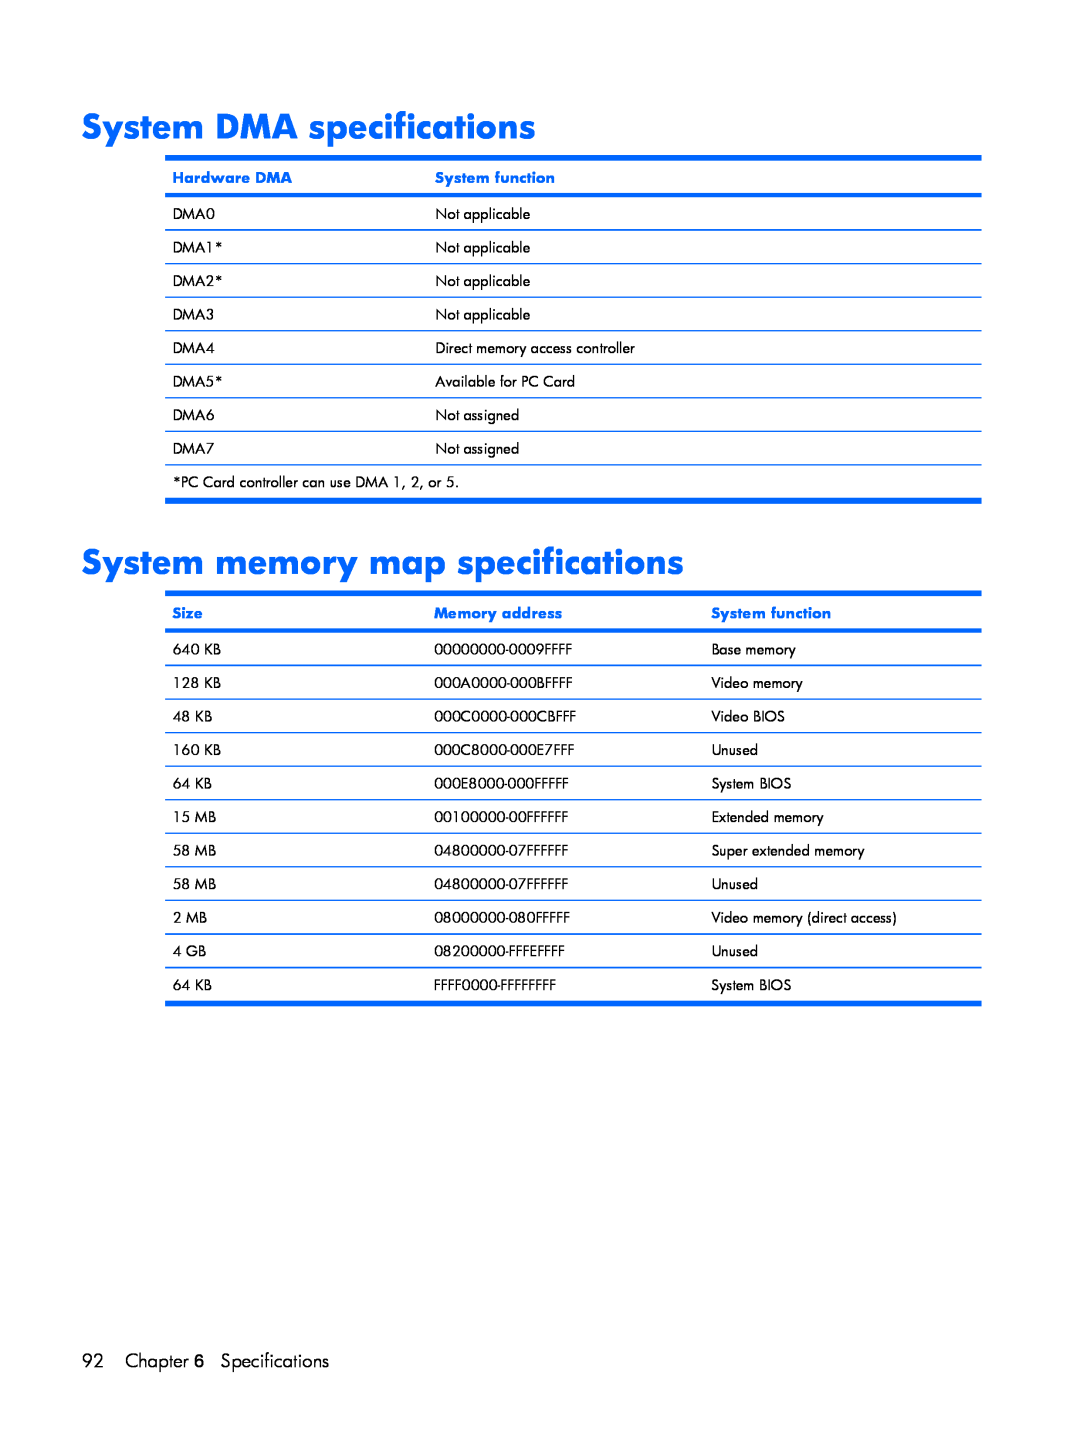 HP C702LA System DMA specifications, System memory map specifications, Hardware DMA, System function, Size, Memory address 